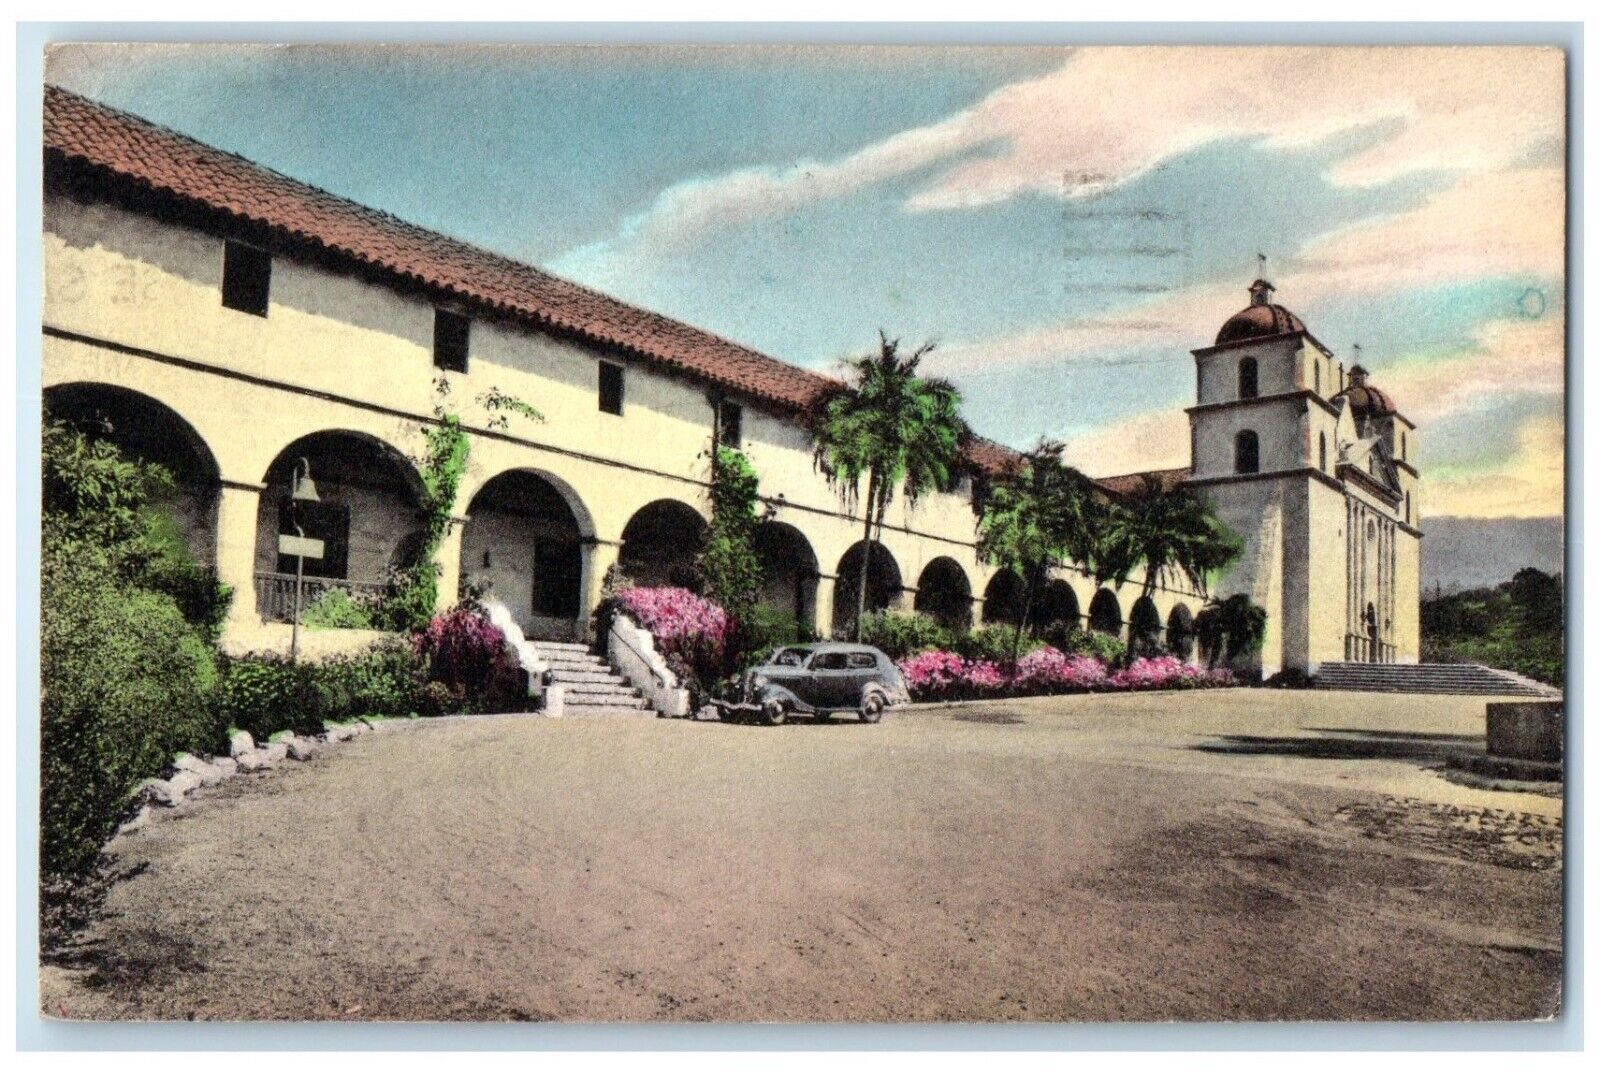 1942 Mission Santa Barbara Queen Mission Los Angeles CA Hand-Colored Postcard